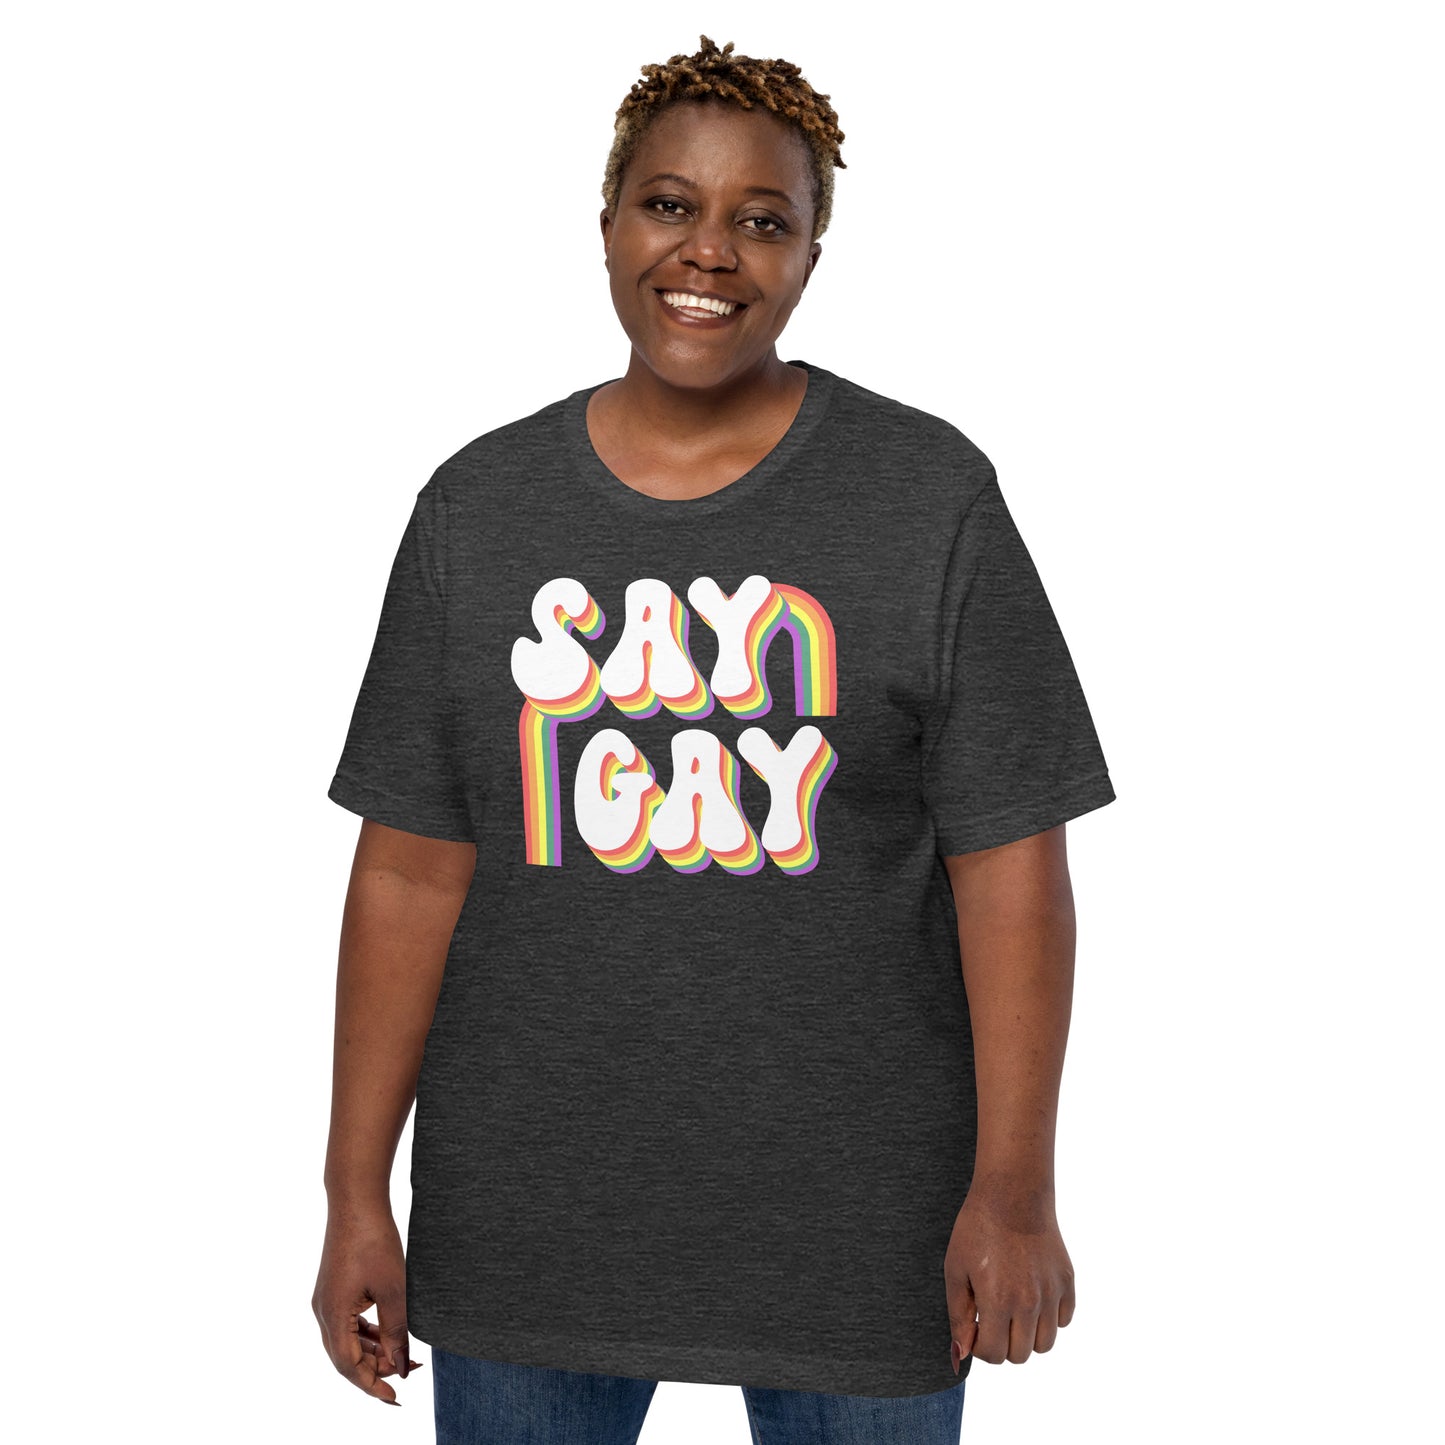 Say Gay Unisex t-shirt